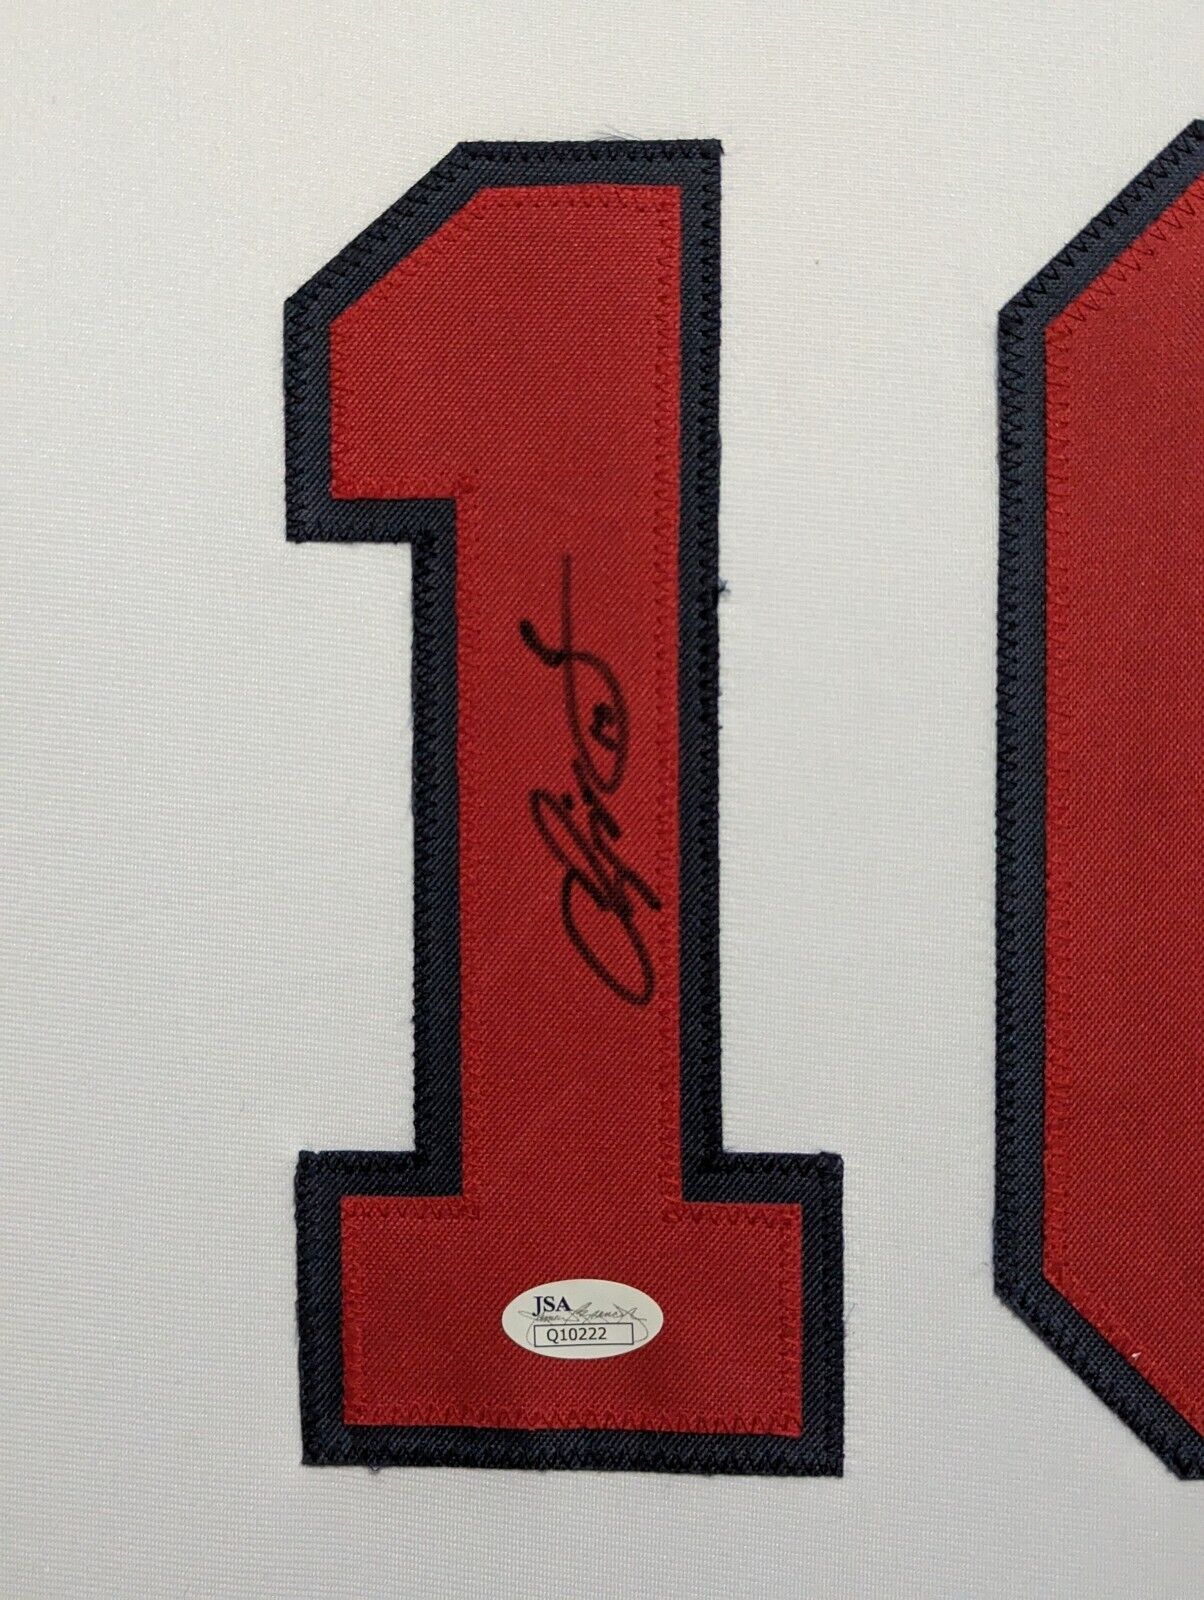 MVP Authentics Framed Atlanta Braves Chipper Jones Autographed Signed Jersey Jsa Coa 630 sports jersey framing , jersey framing